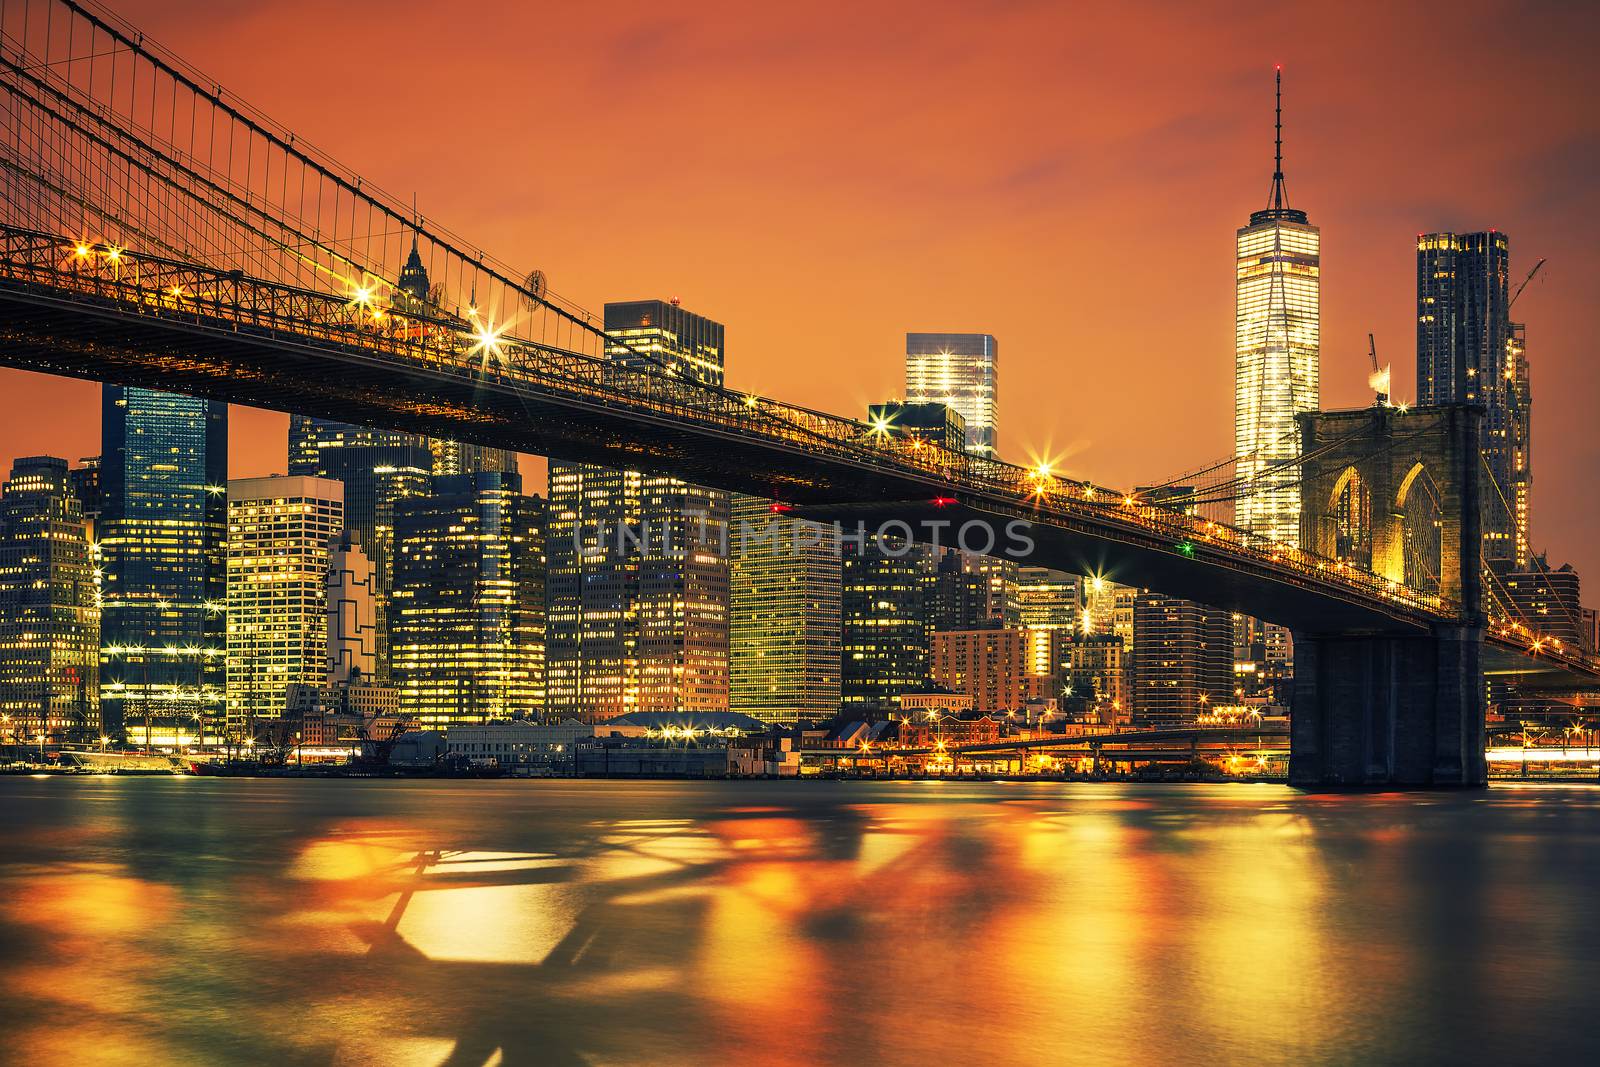 New York City Manhattan midtown at sunset with Brooklyn Bridge.